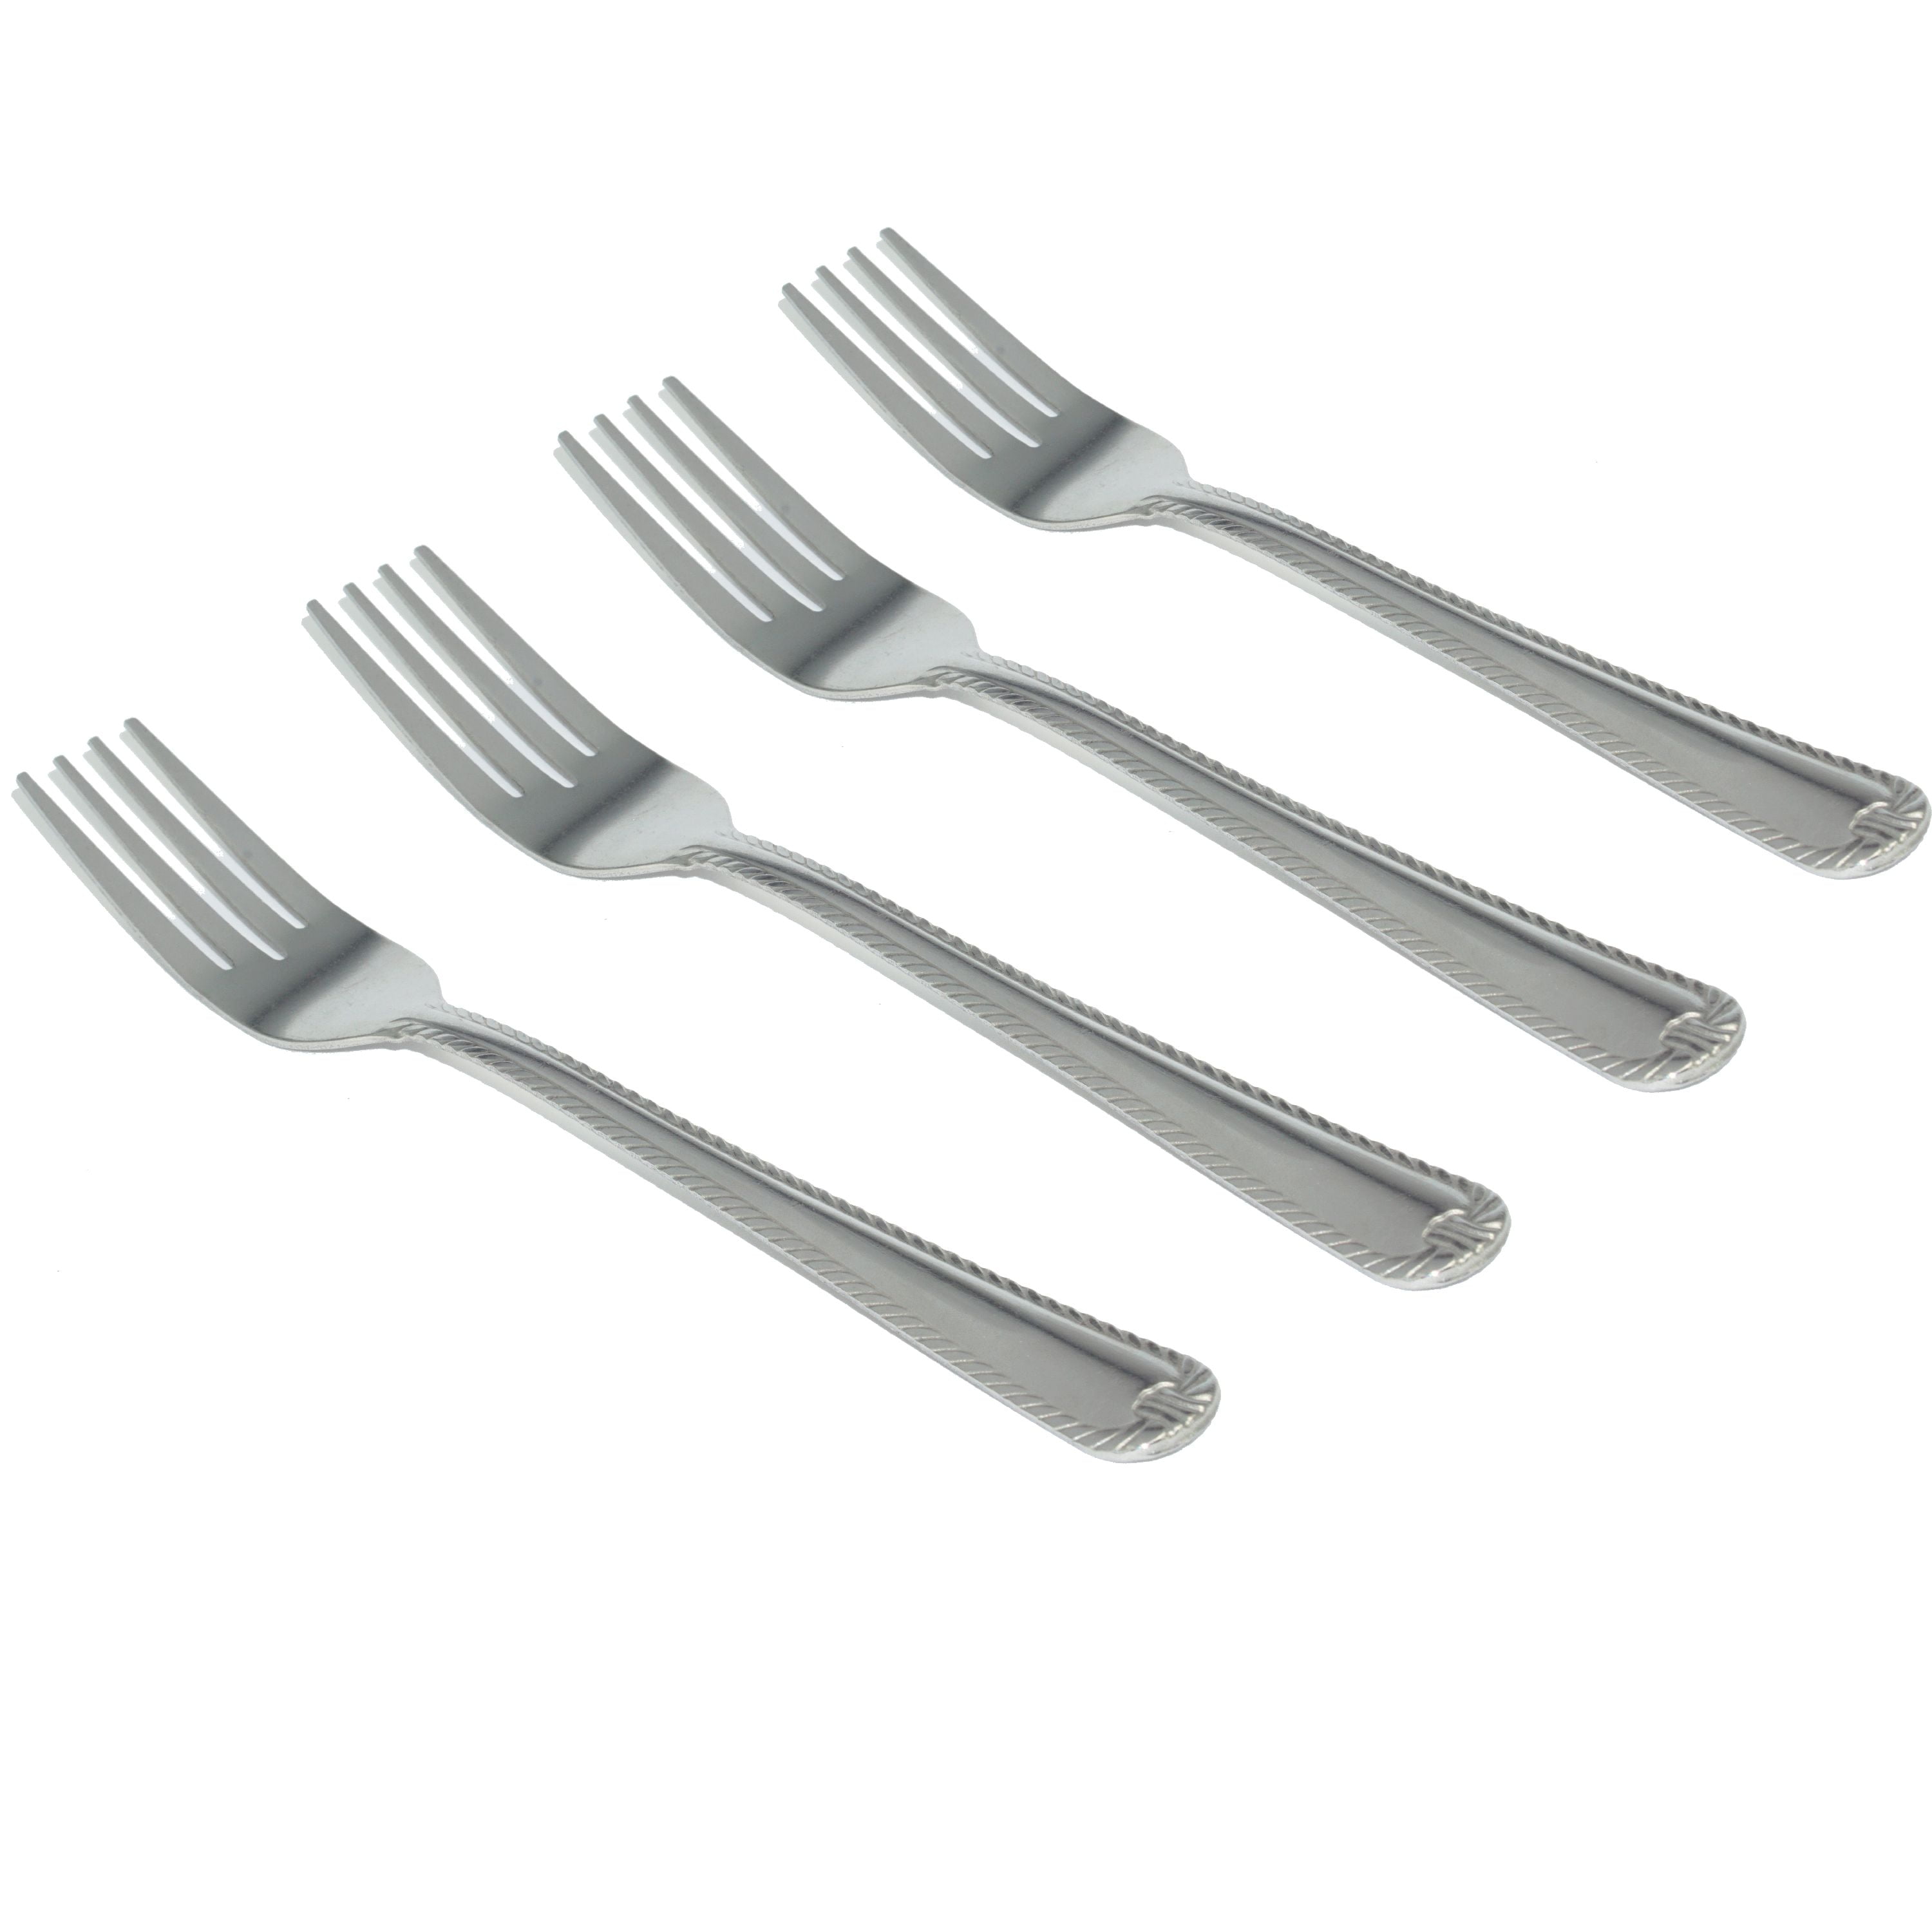 4pcs Stainless steel Cutlery Dinning Table Forks Dinner Forks 4Pack Silver Forks 